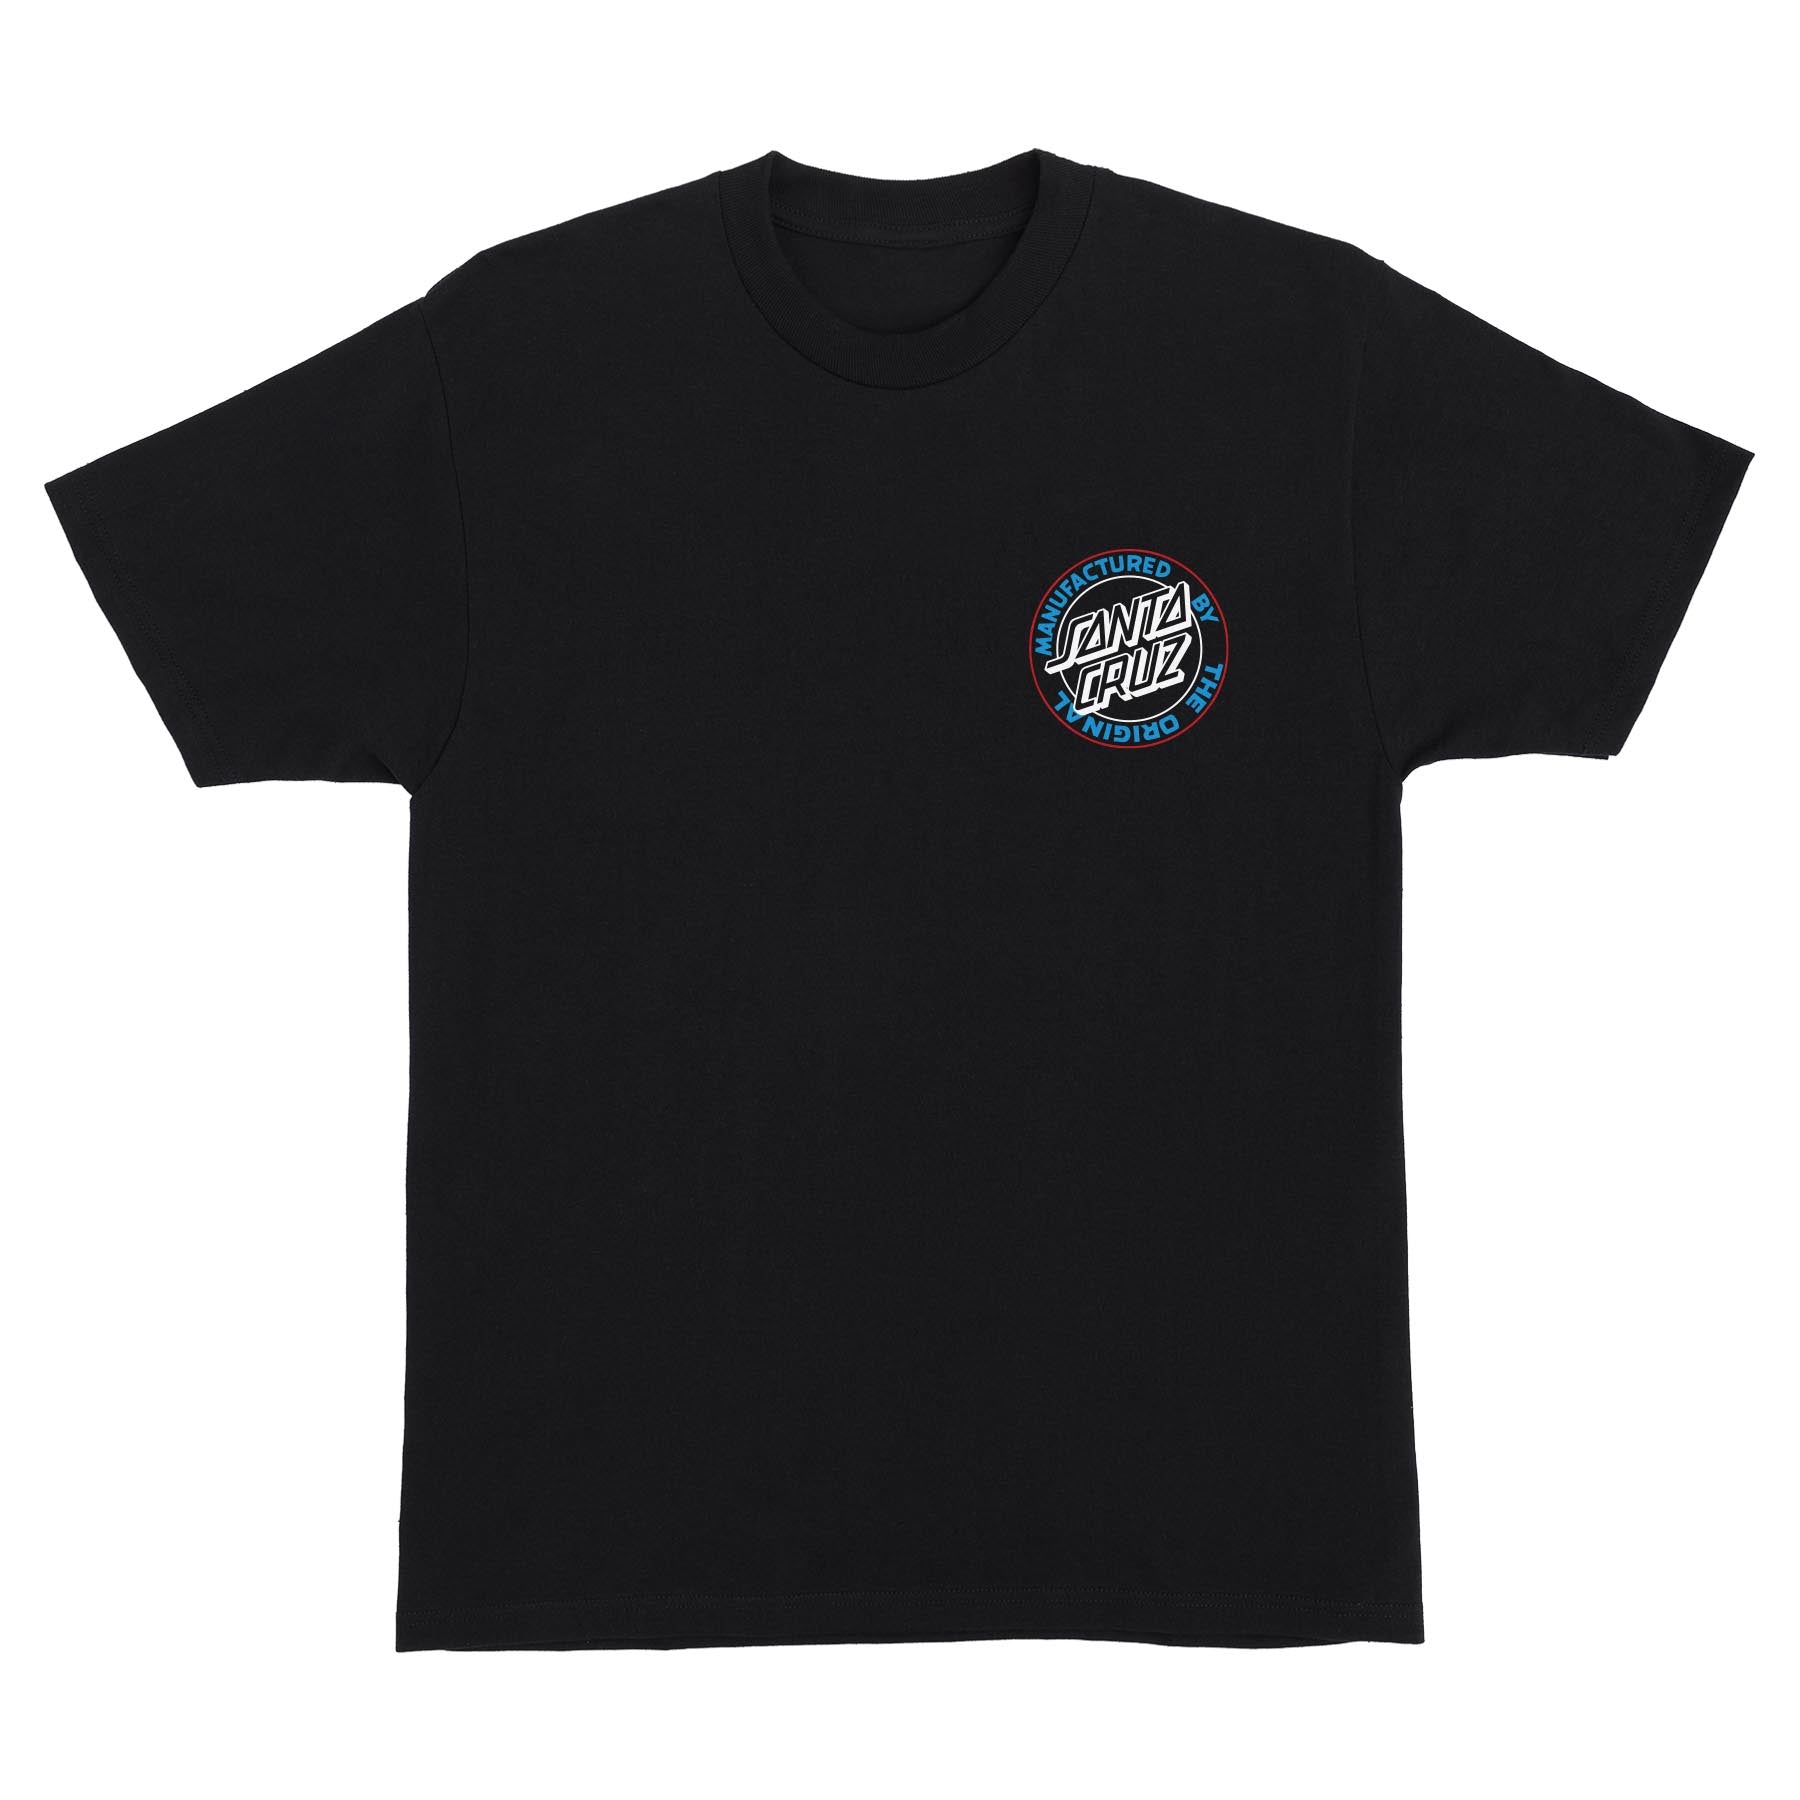 Santa Cruz Natas Screaming Panther T-Shirt - The Dark Slide